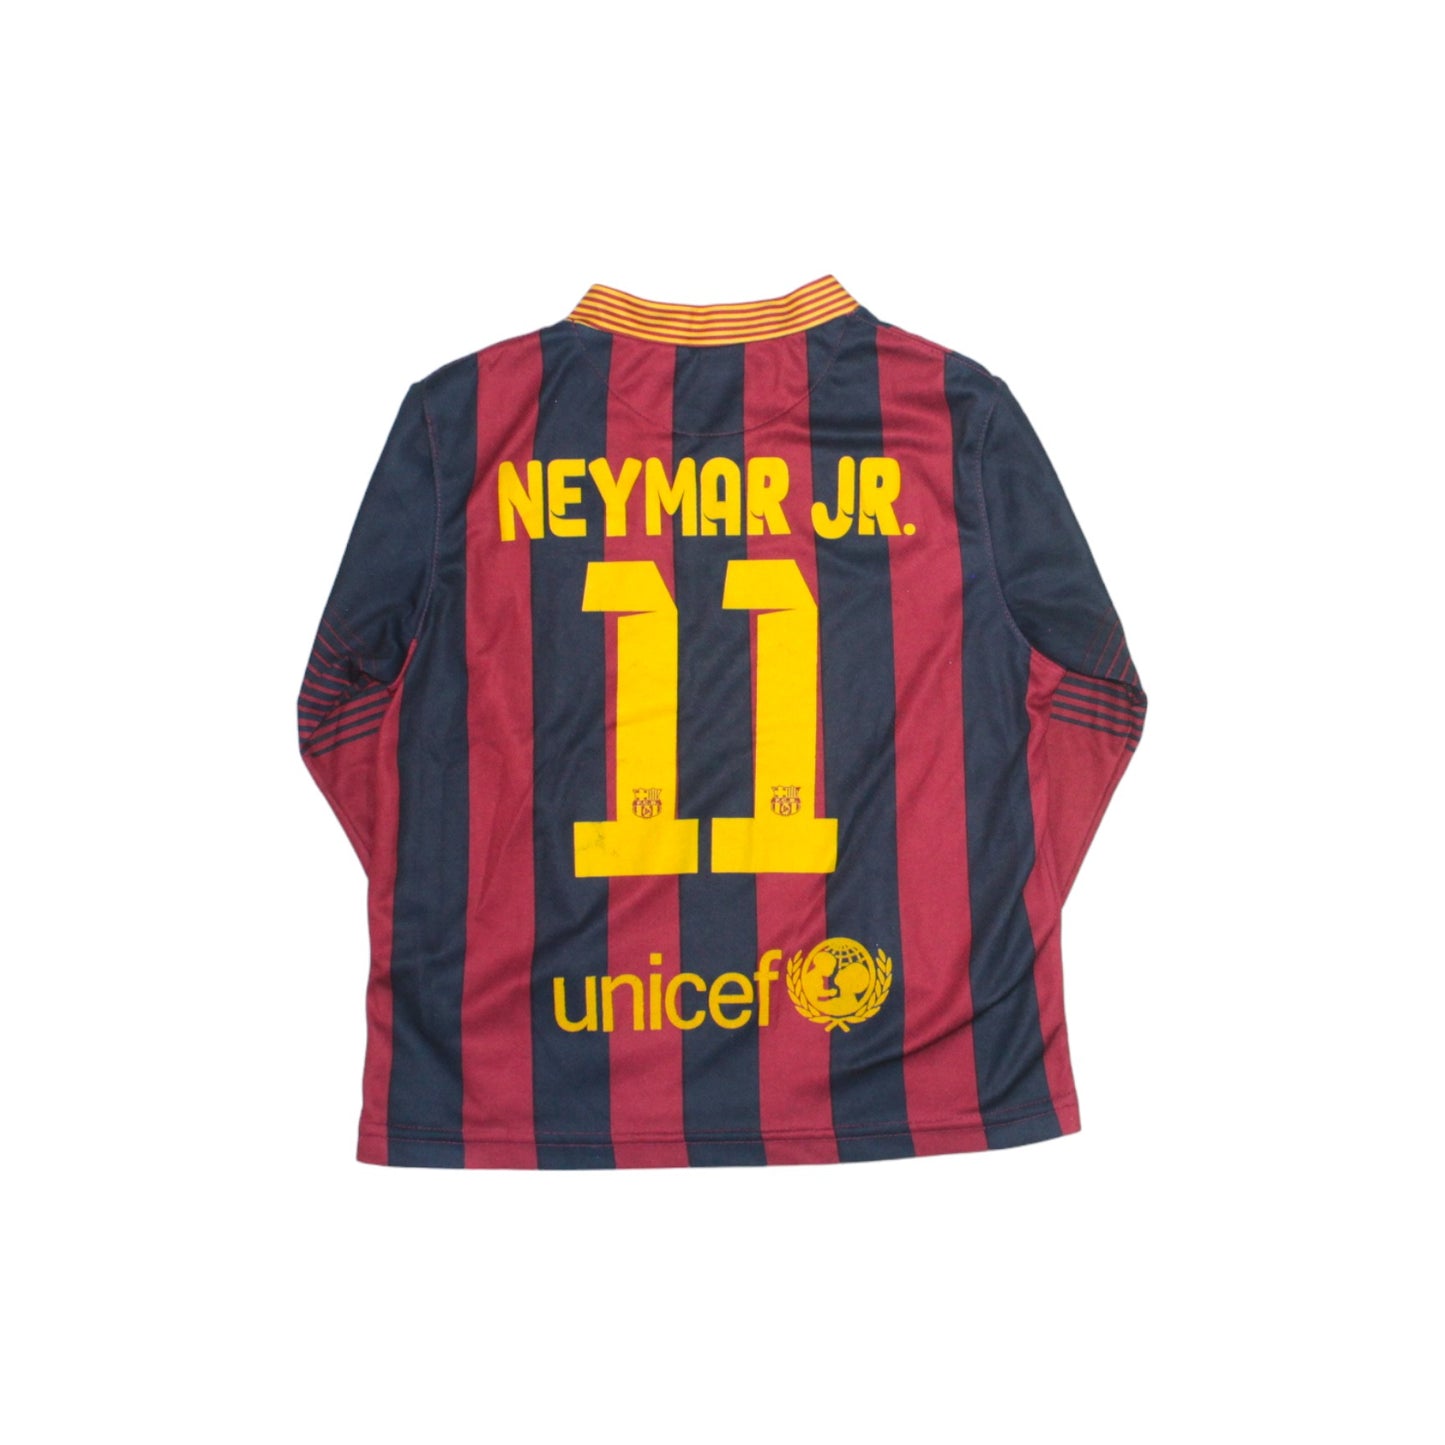 Jersey Neymar Jr. unitalla